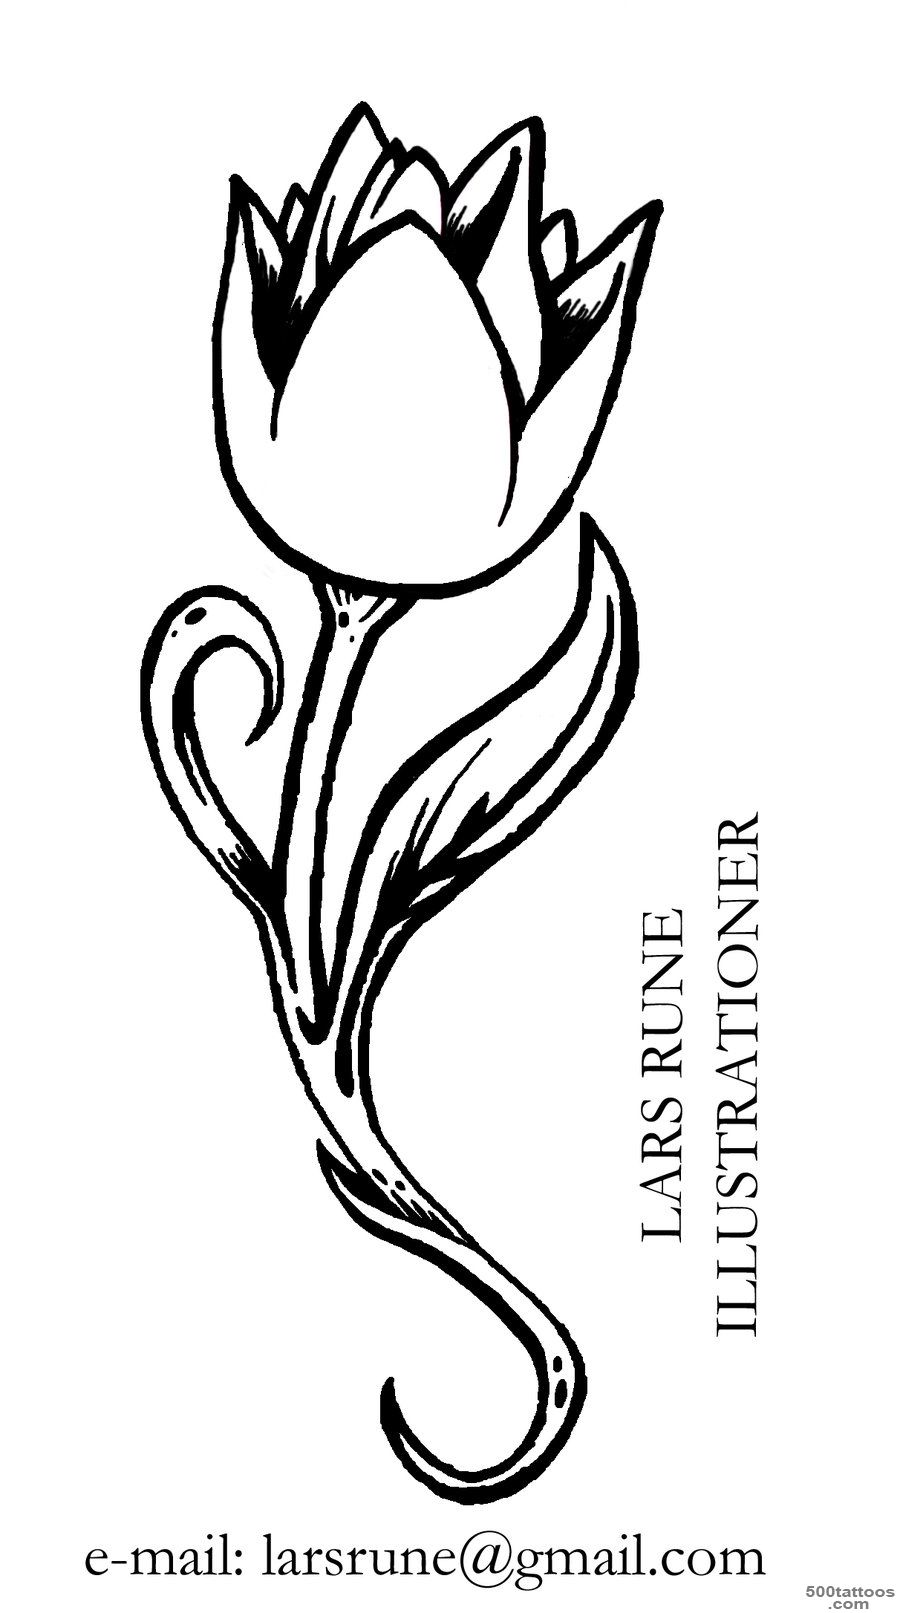 Tulip Design Tattoo   Tattoes Idea 2015  2016_30